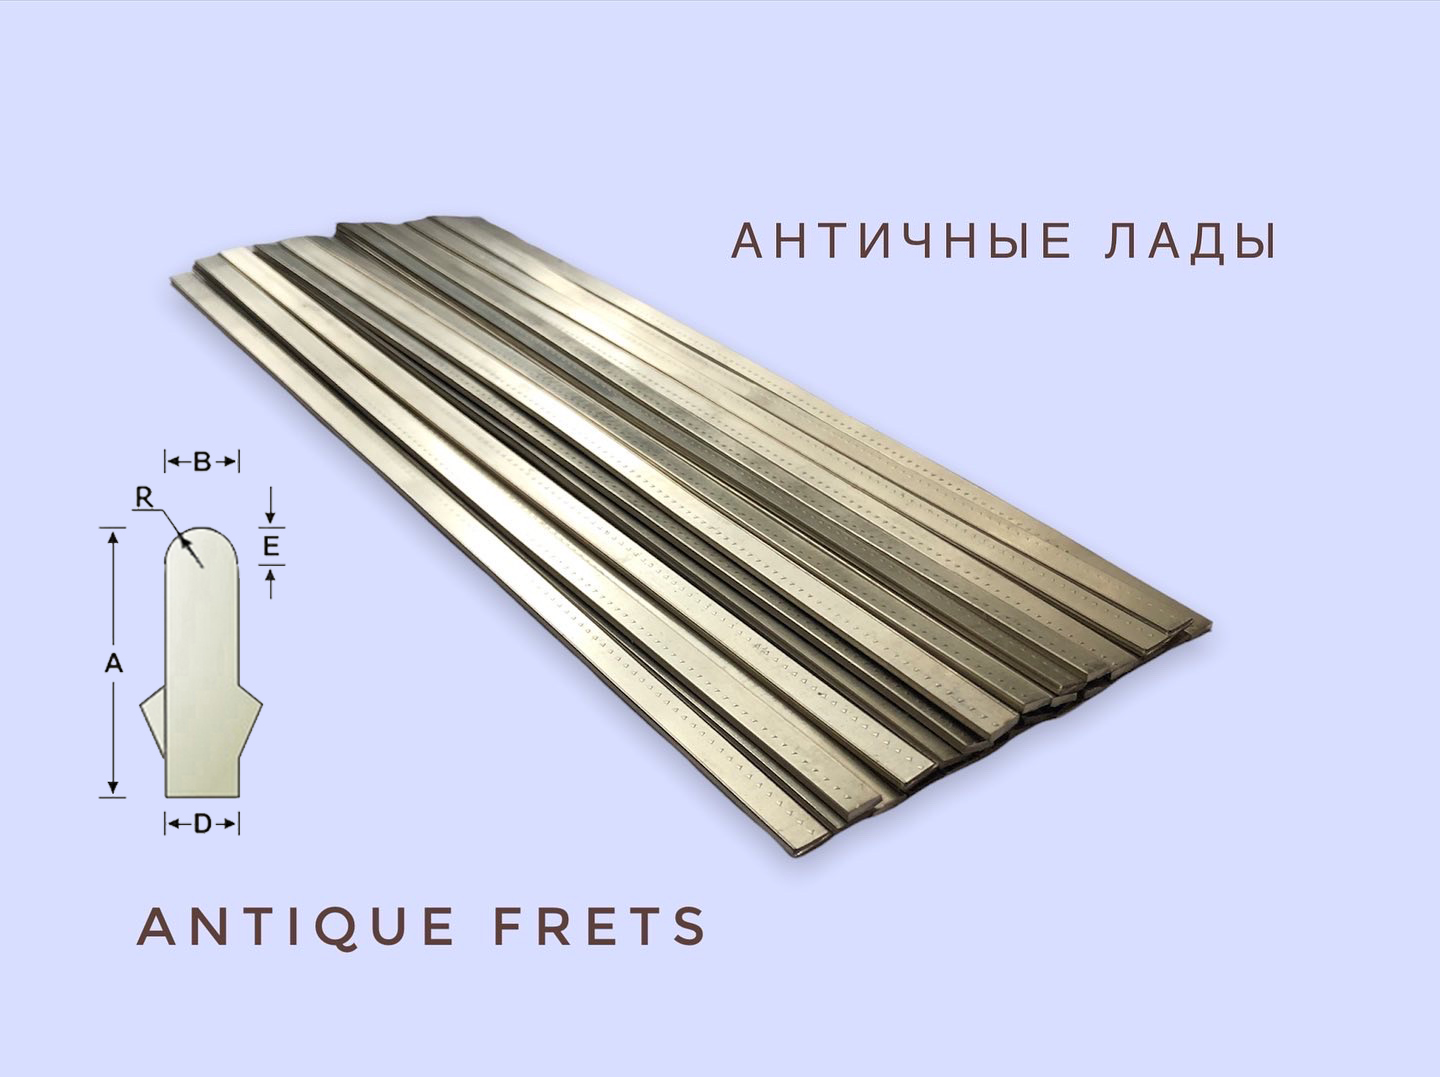 Features of shapes: antique frets